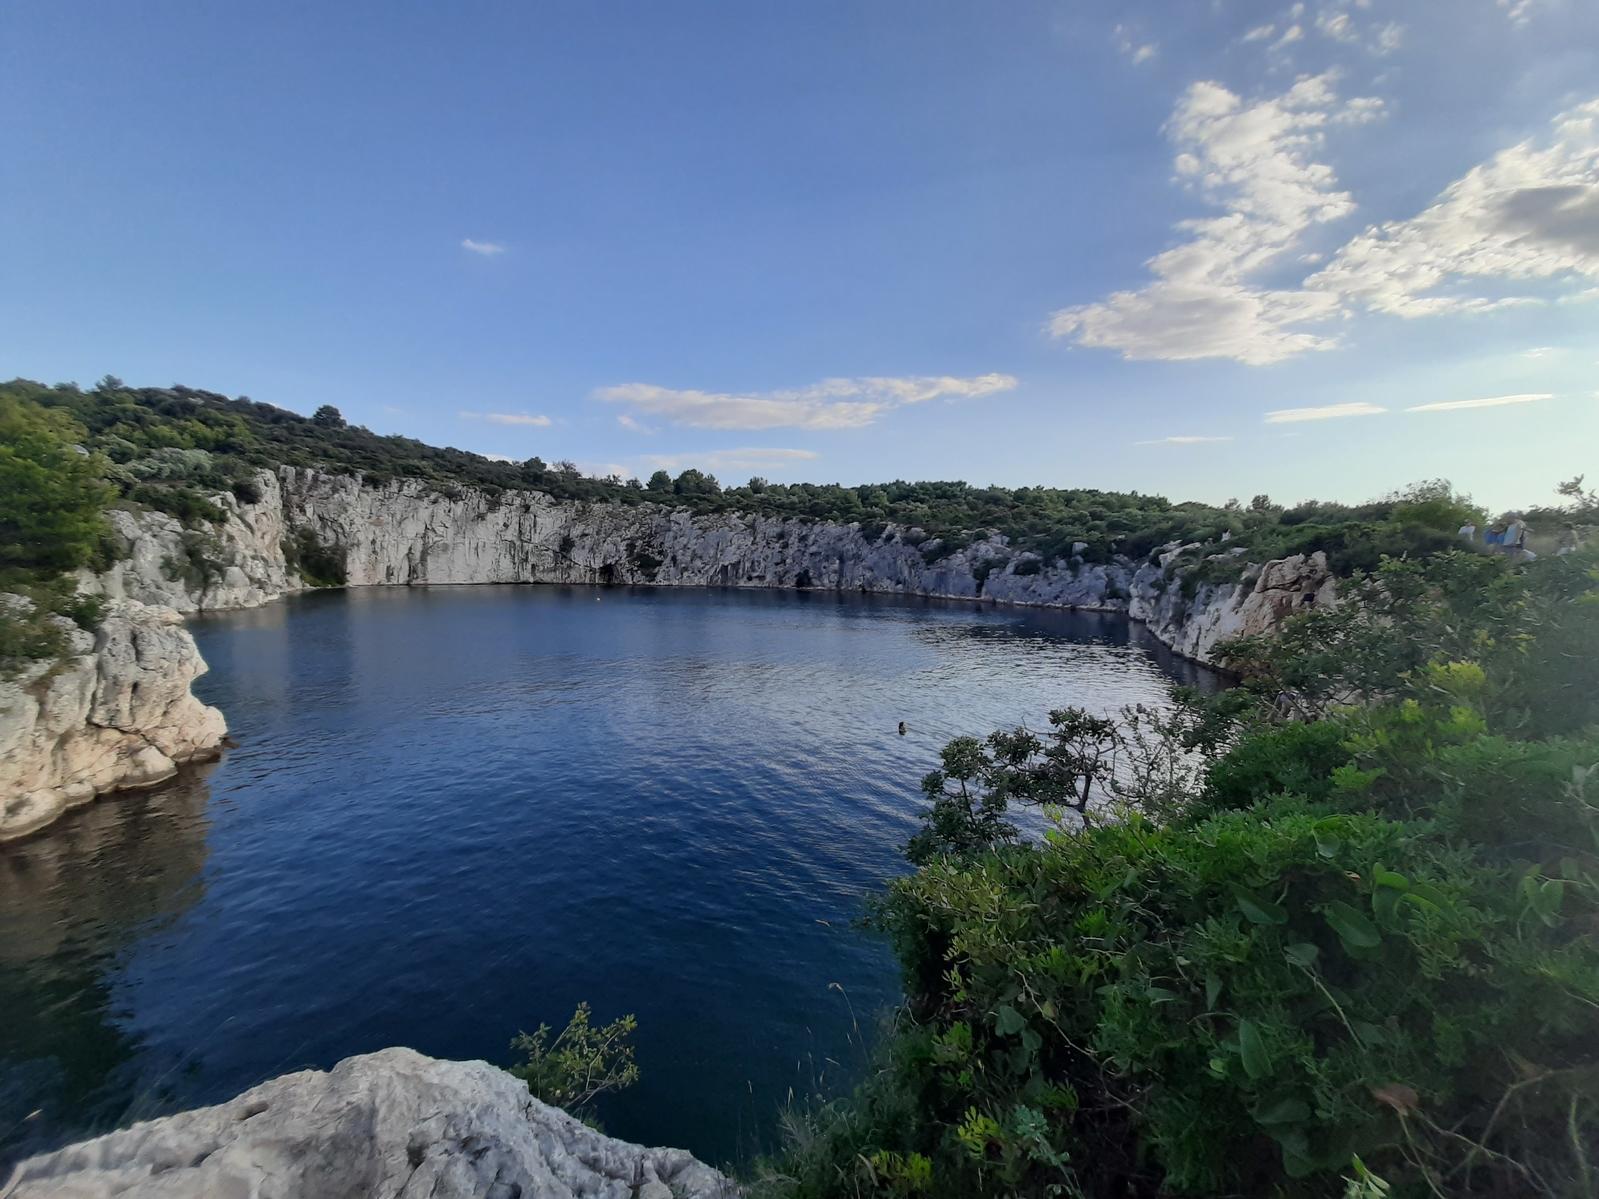 Dragon's eye lake in Rogoznica Croatia: Untouched nature with amazing heritage